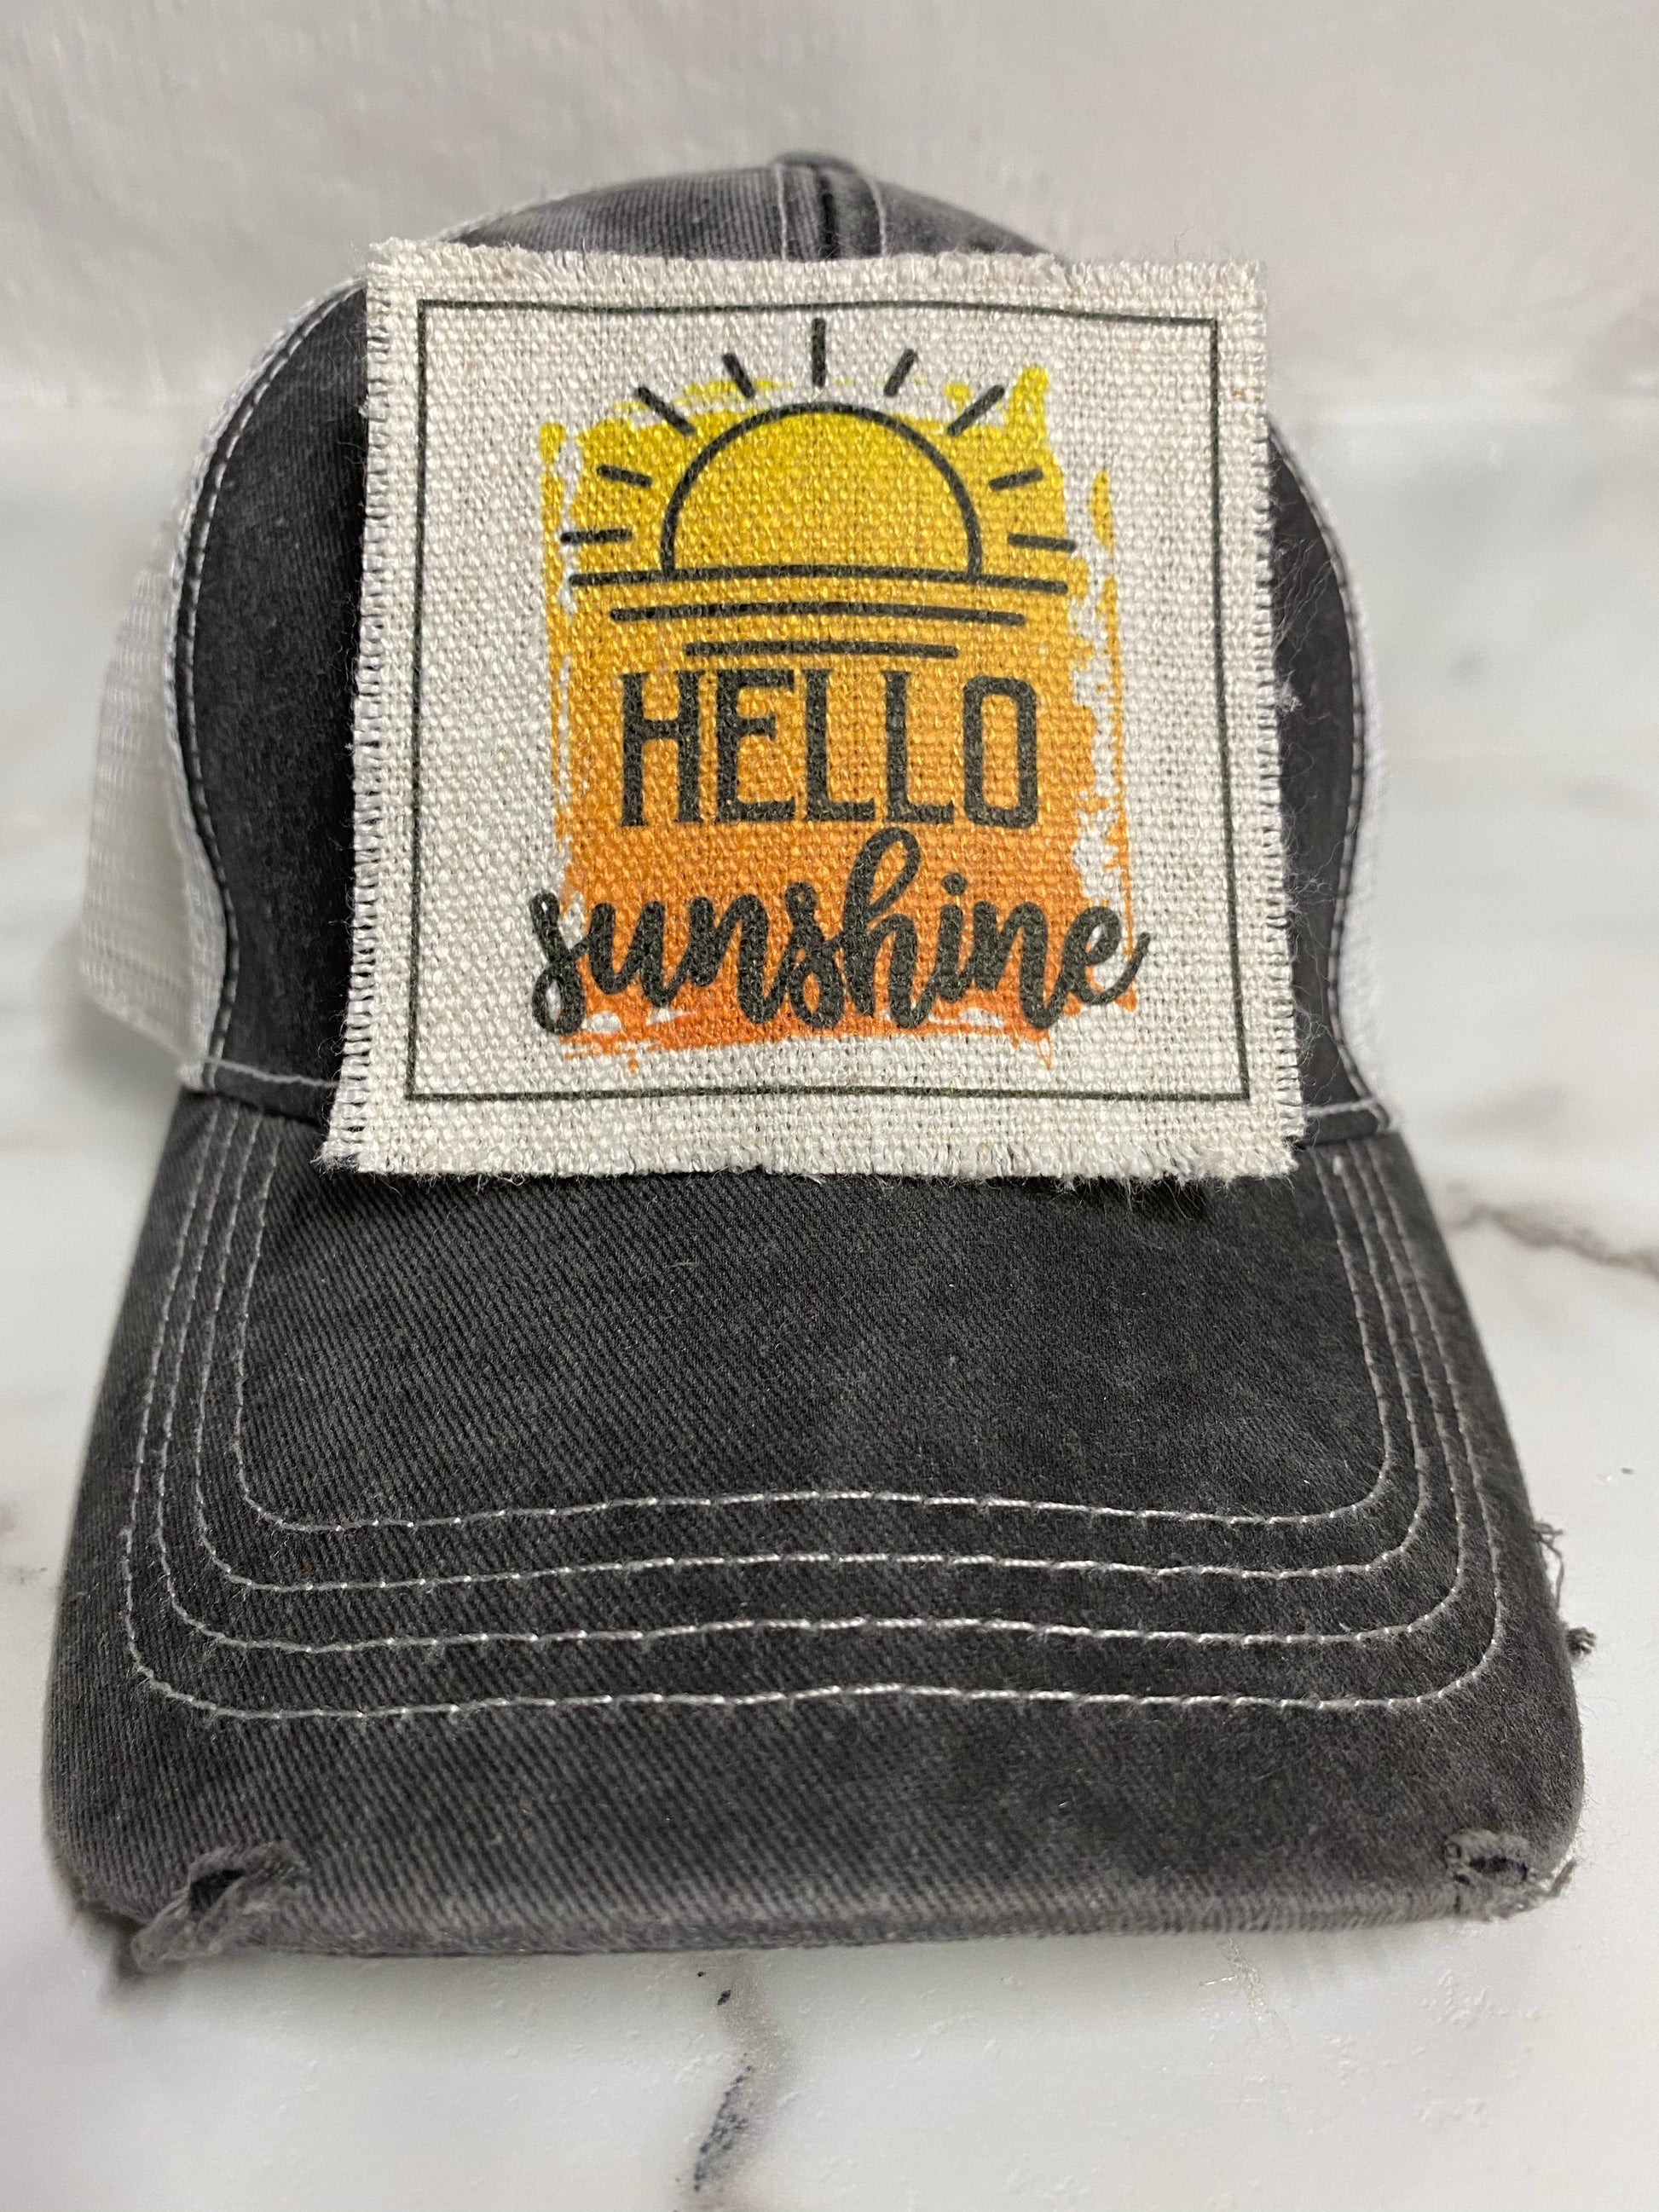 Hello Sunshine Hat Patch